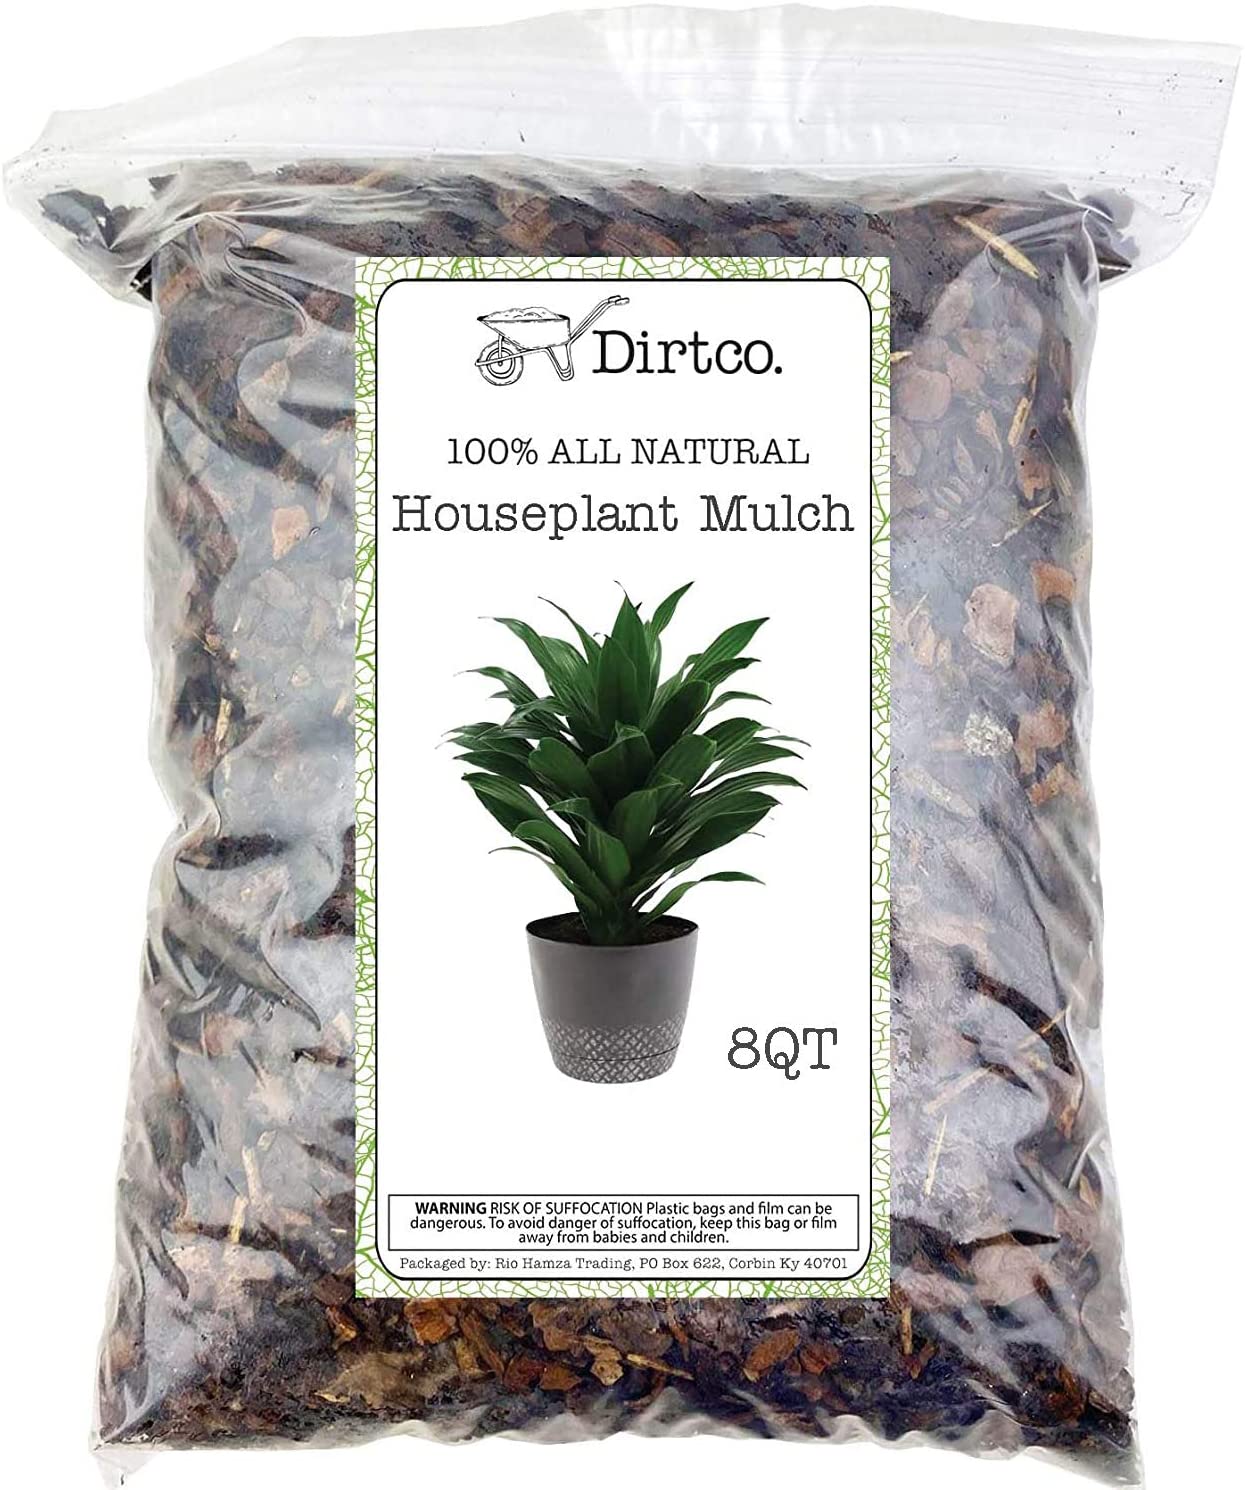 Dirtco. Houseplant Mulch